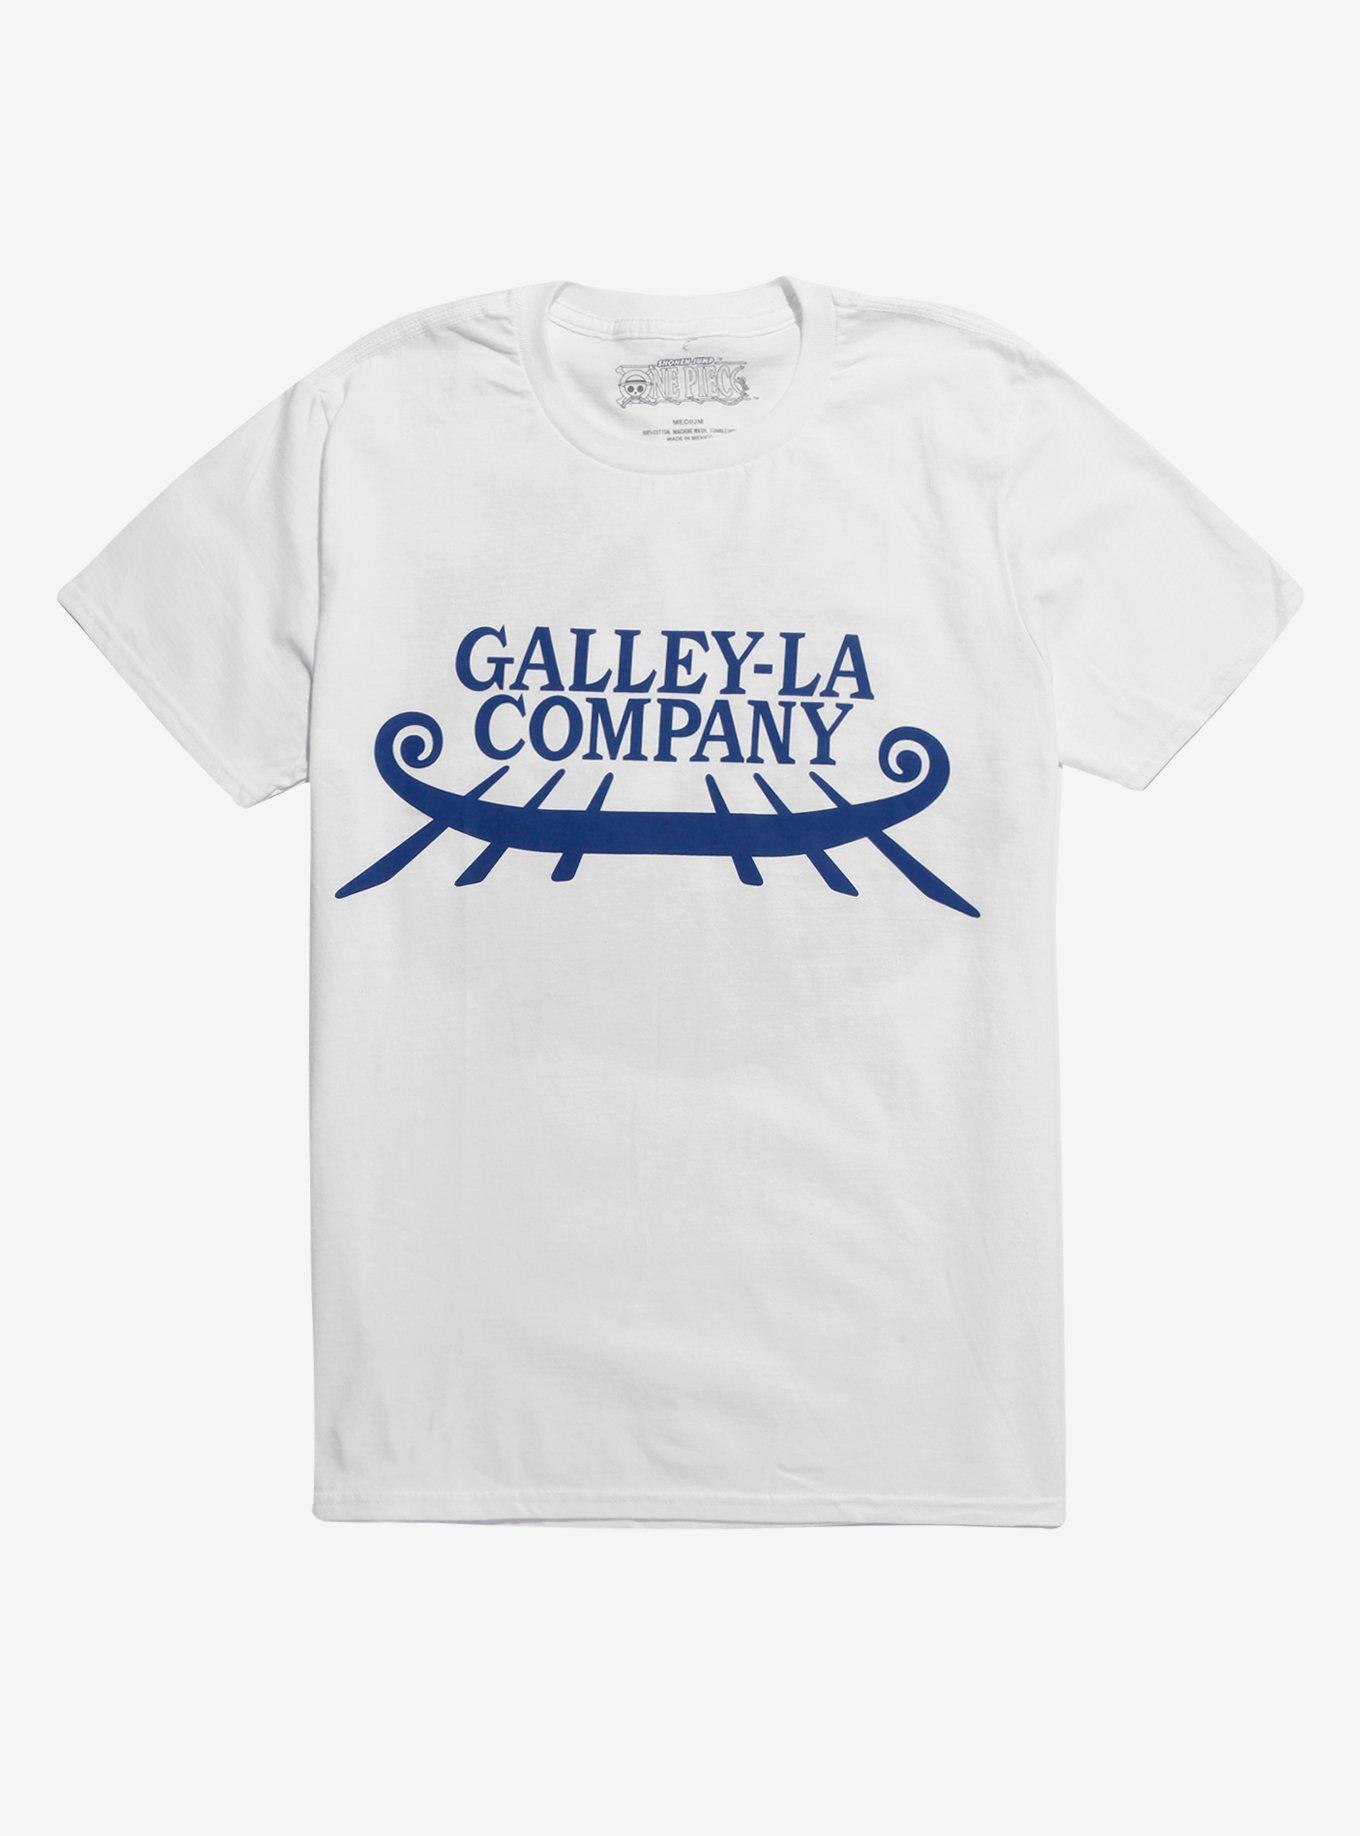 One Piece Galley-La Company T-Shirt, WHITE, hi-res